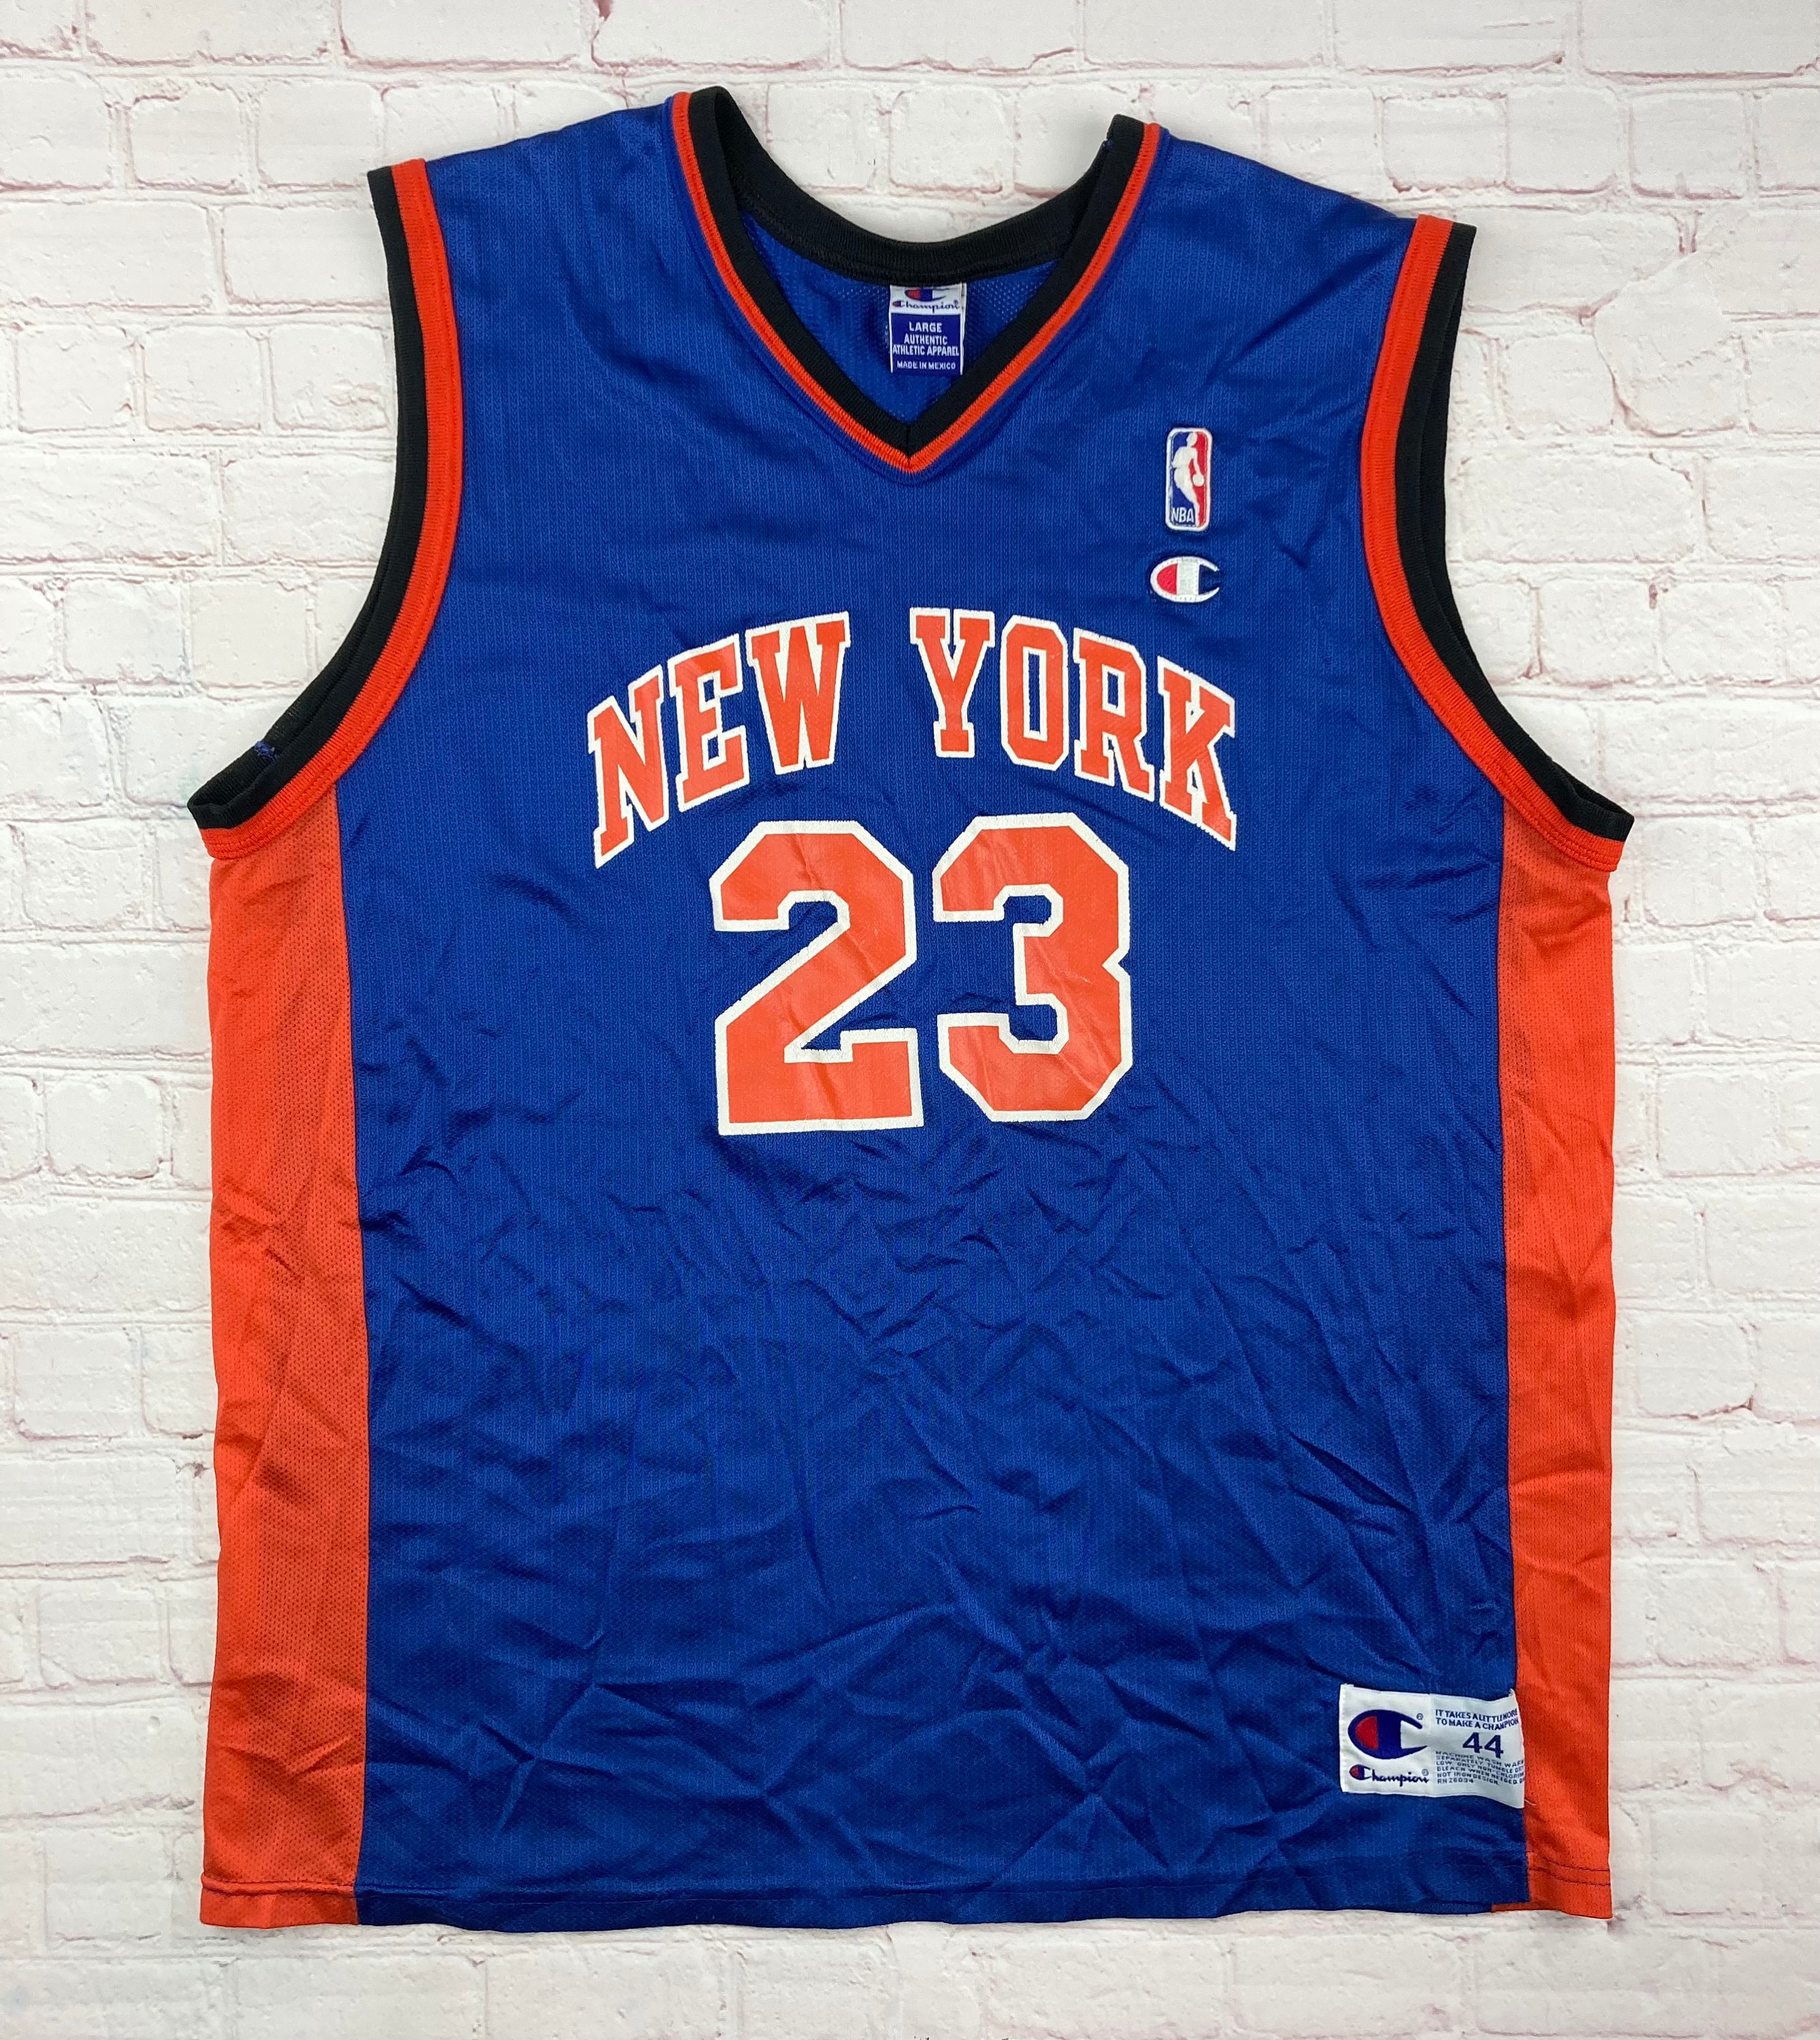 EastVintageShopPK John Starks Knicks New York Jersey Blue 90s Champion Mens Size XL Ewing